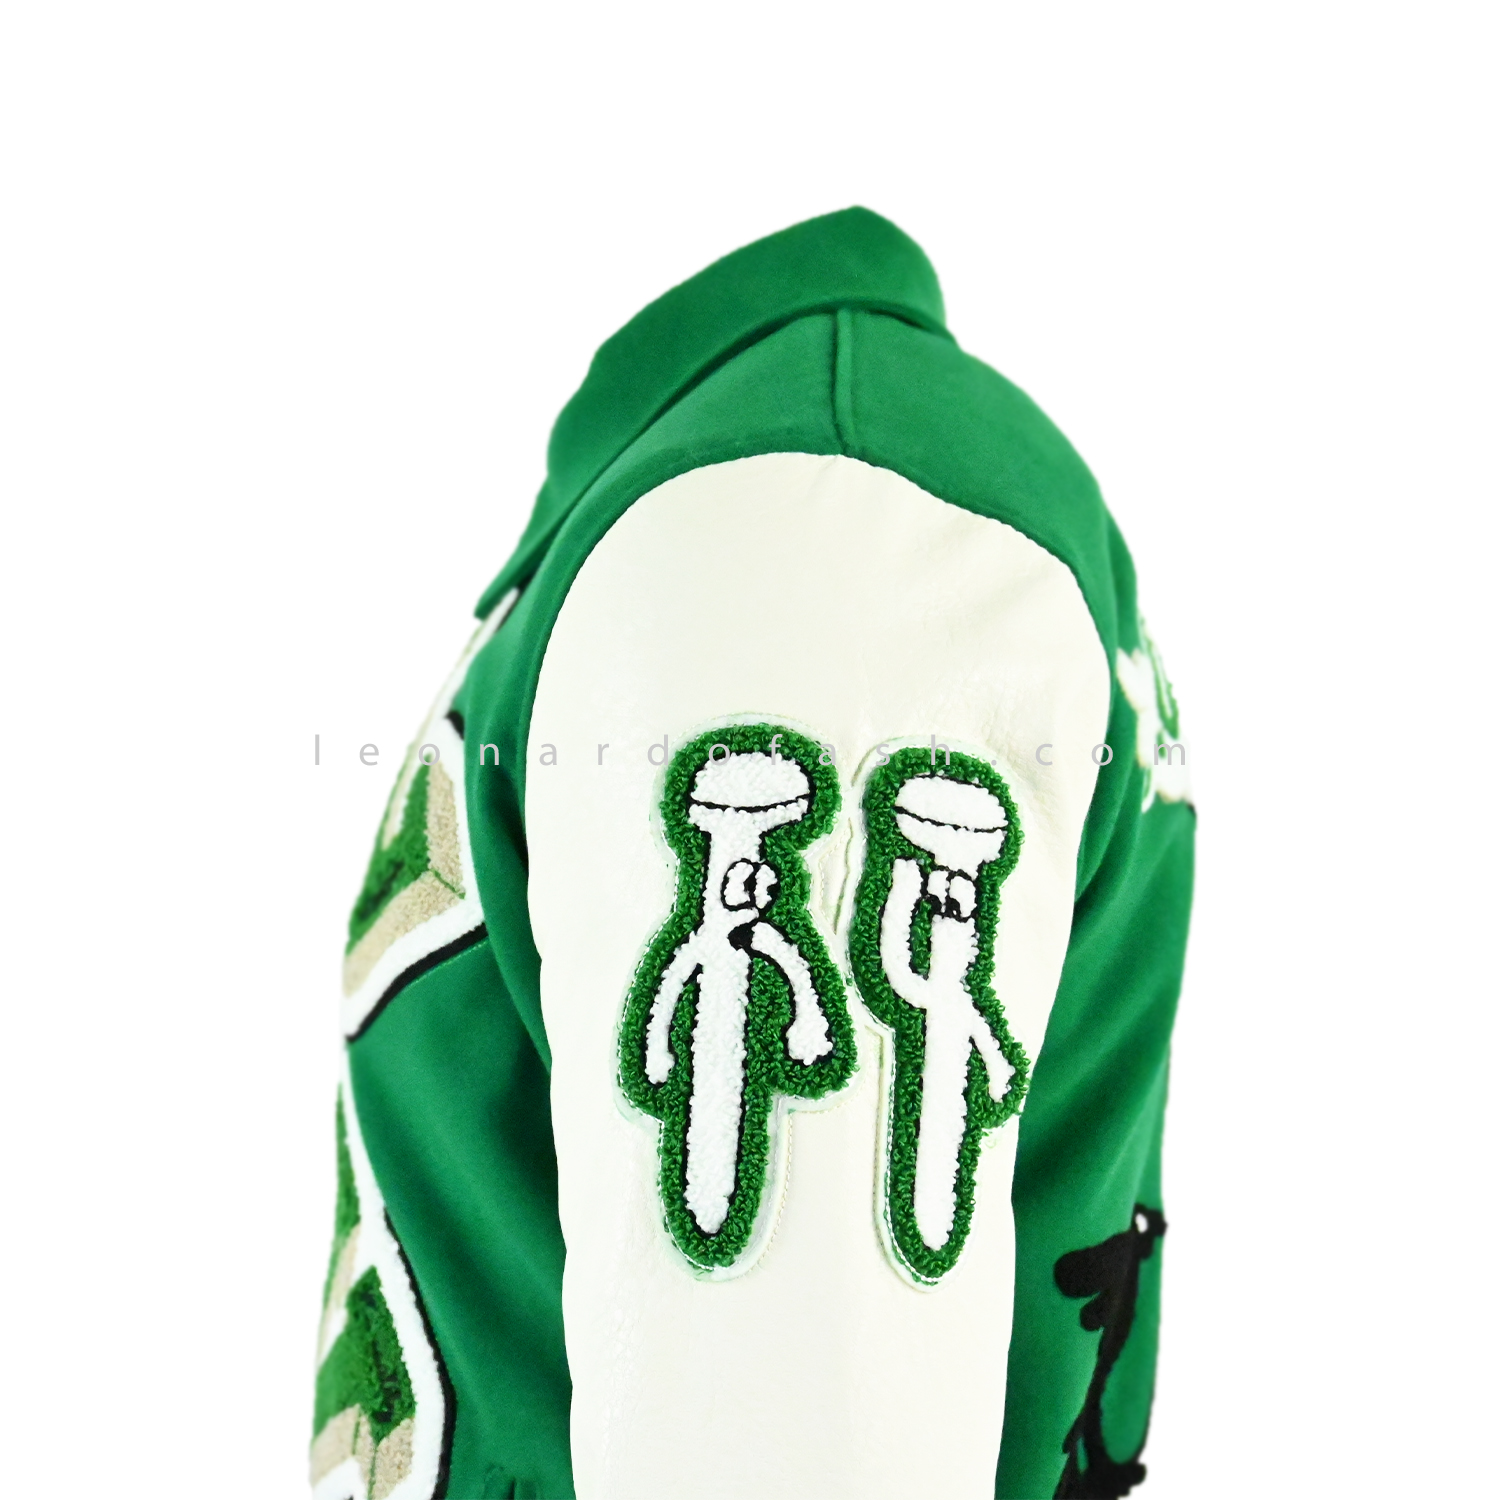 LV Varsity Jacket Green